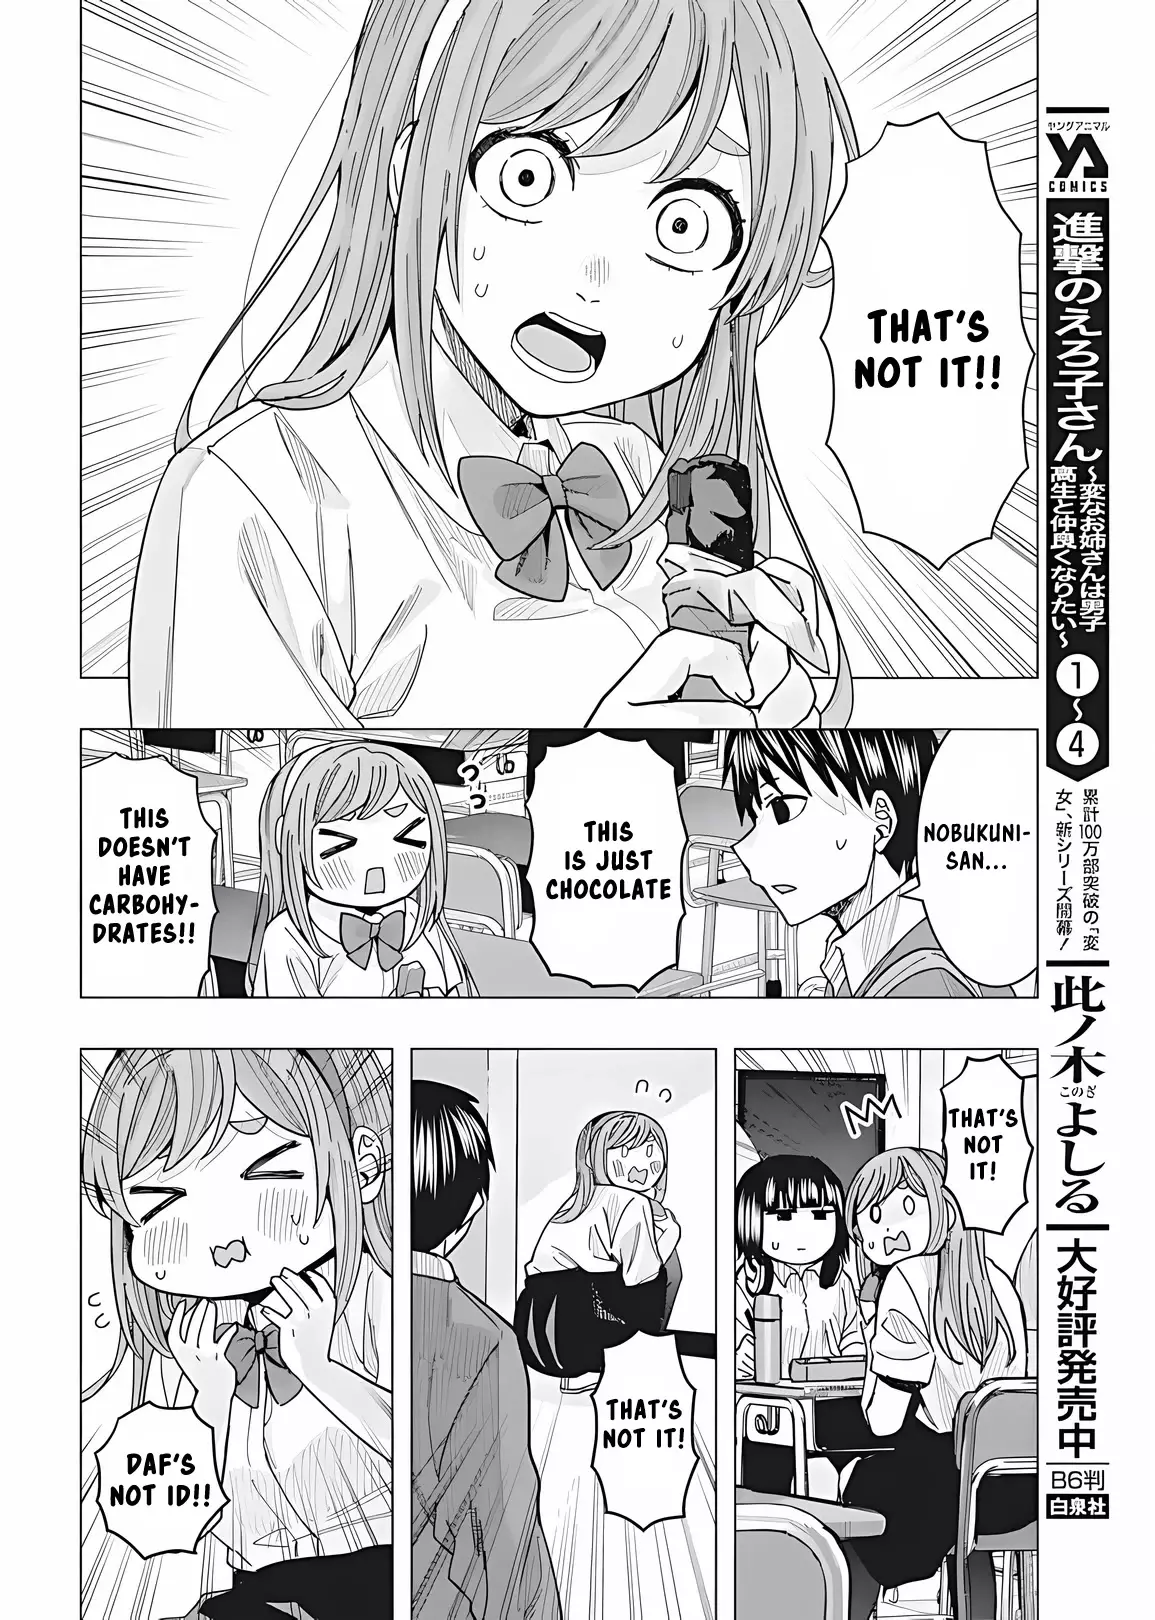 "nobukuni-San" Does She Like Me? - 23 page 10-45c414ca